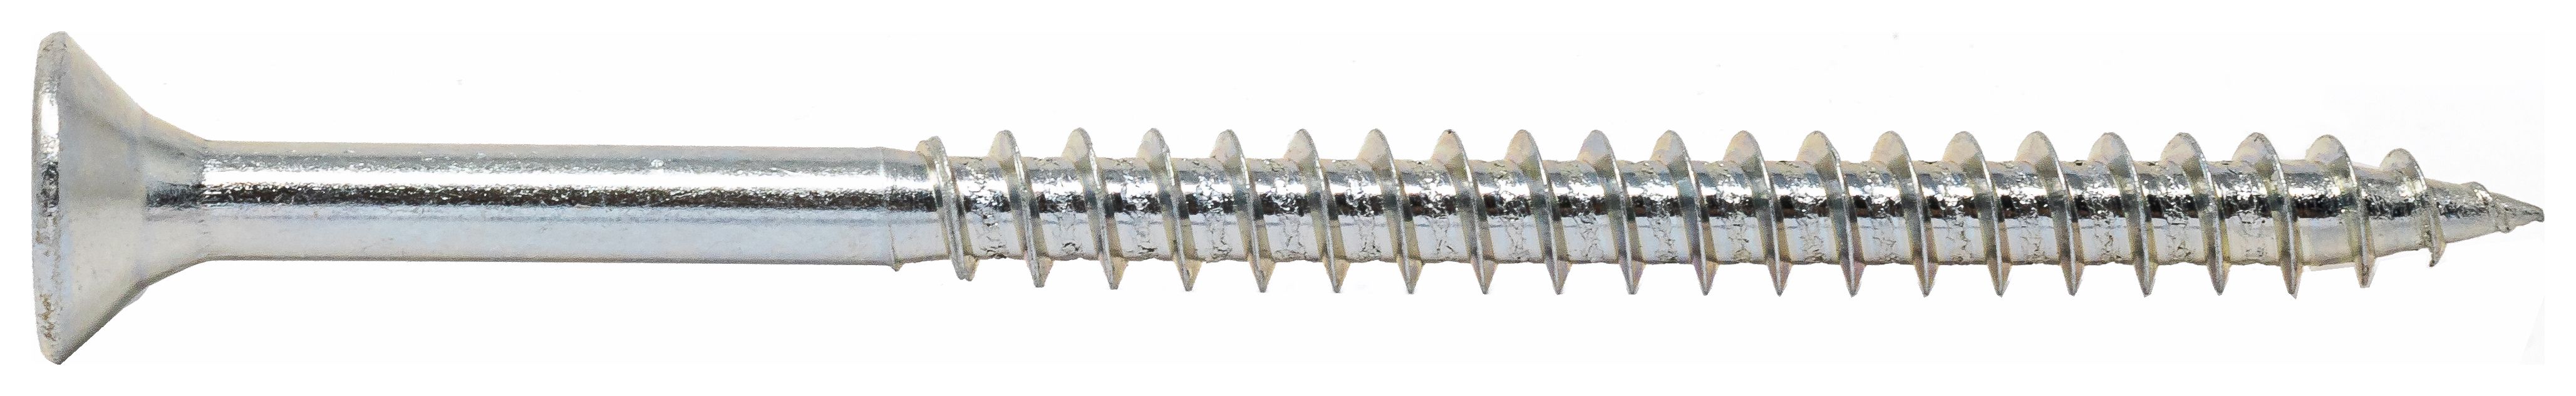 Wickes Single Thread Zinc Plated Screw - 4 X 20mm Pack Of 200